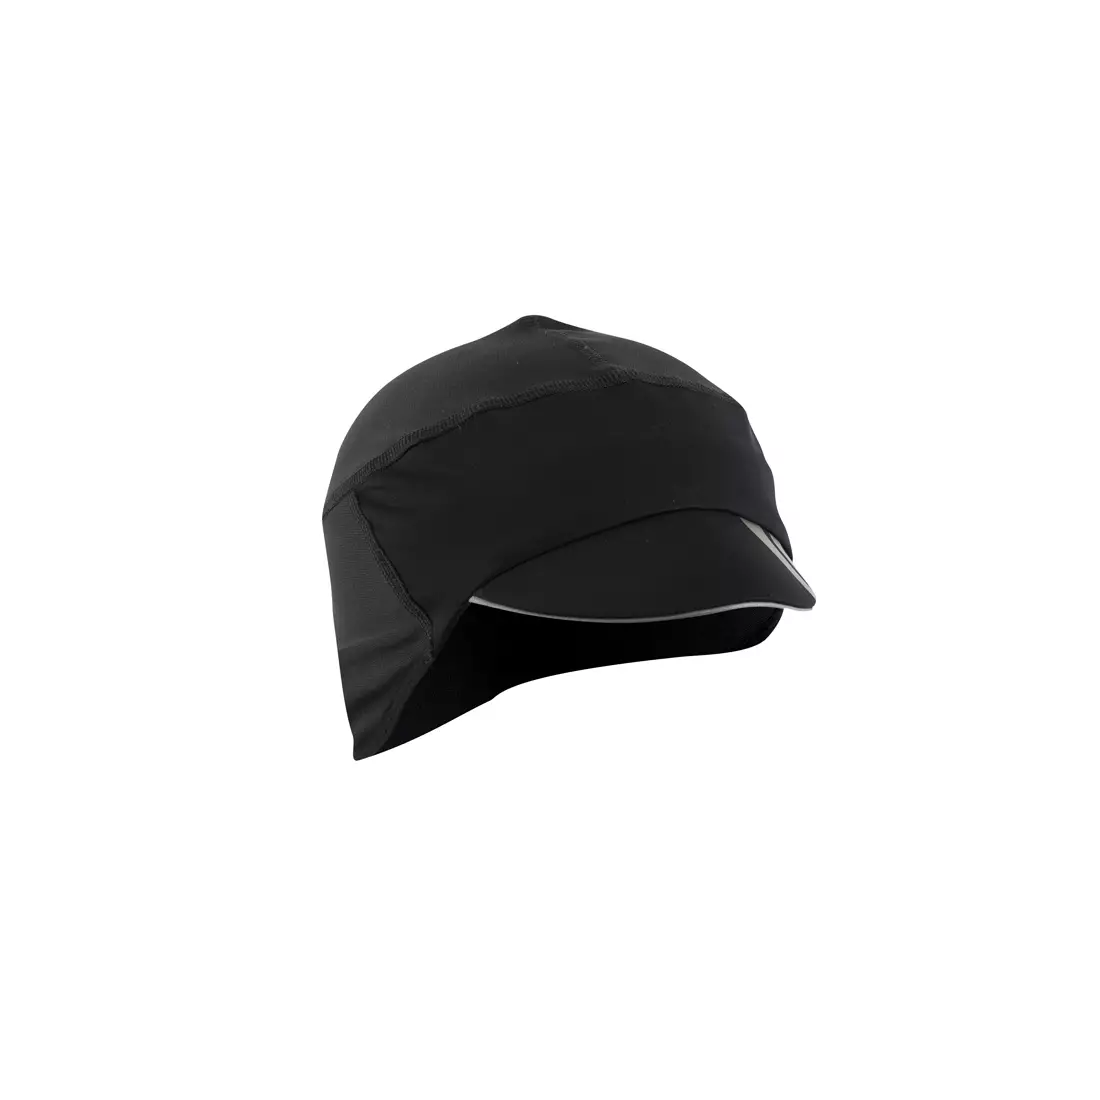 PEARL IZUMI AW17 Barrier Helmet Cap 14361607021ONE Black universal size